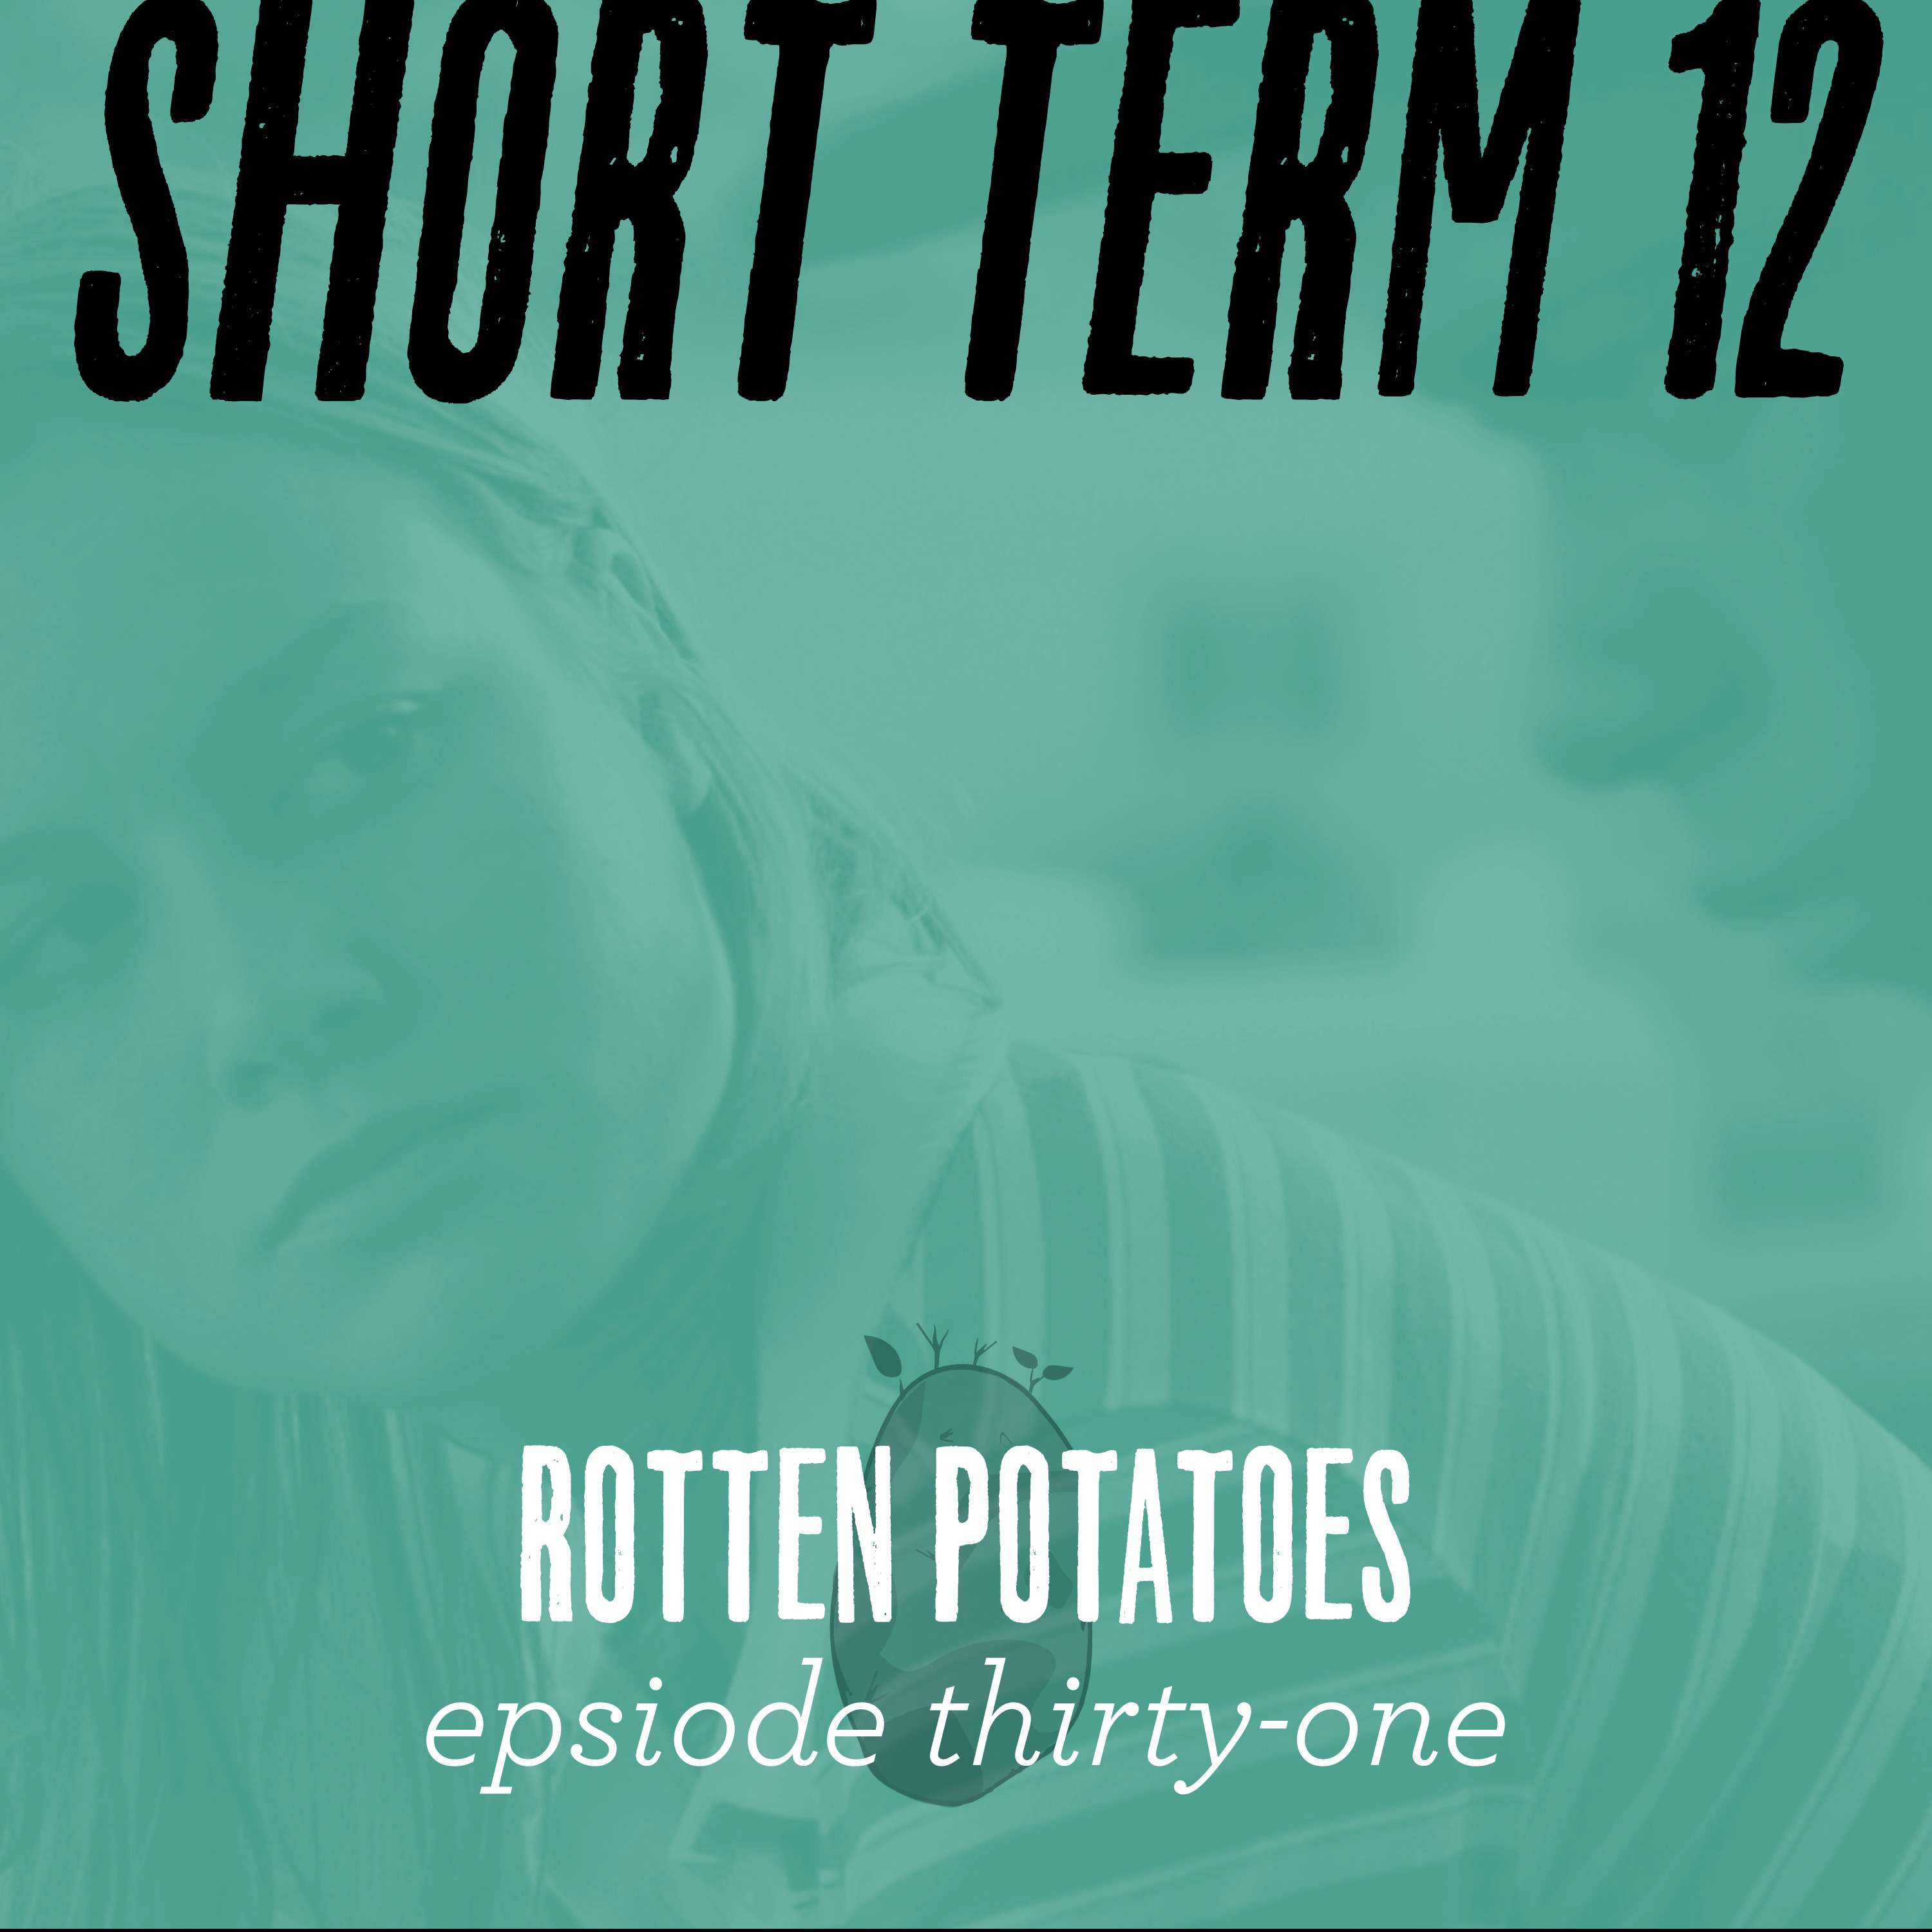 Ep 31: Short Term 12